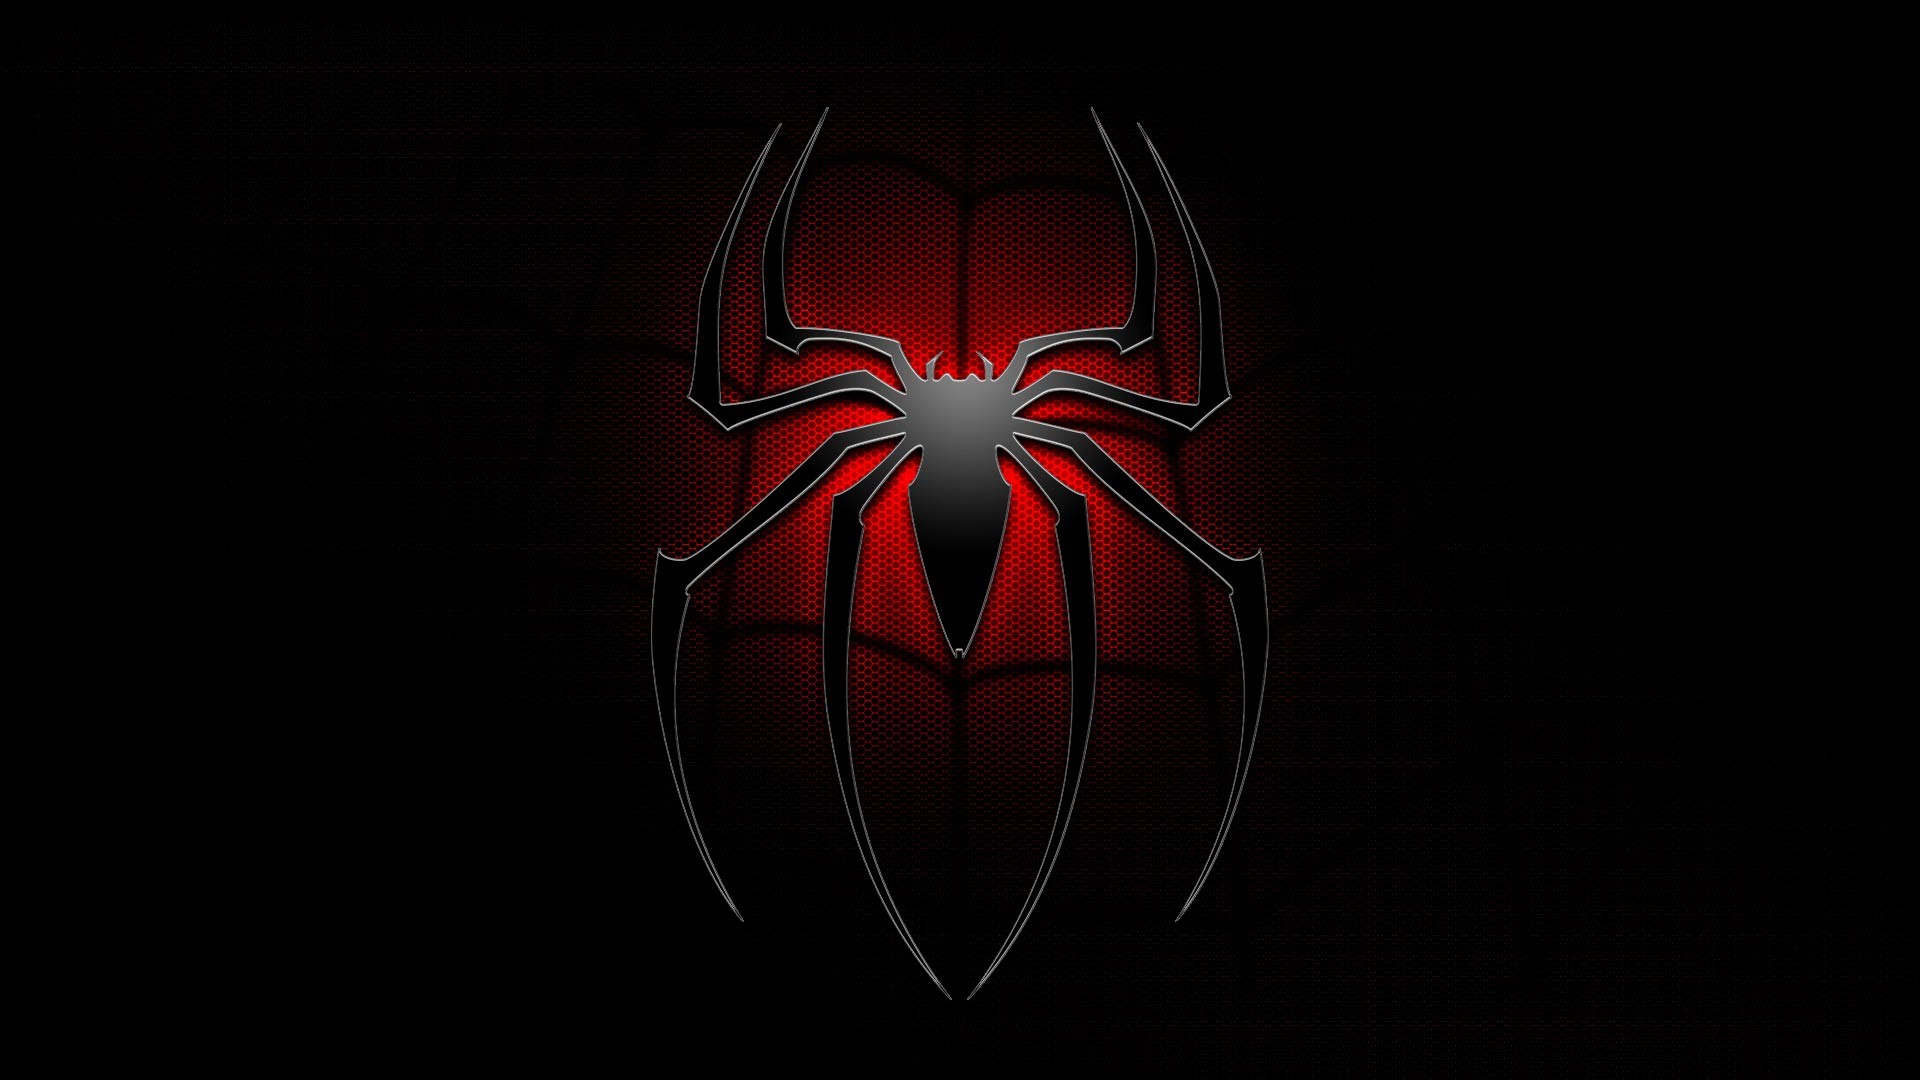 Hd spiderman logo wallpaper images jpg